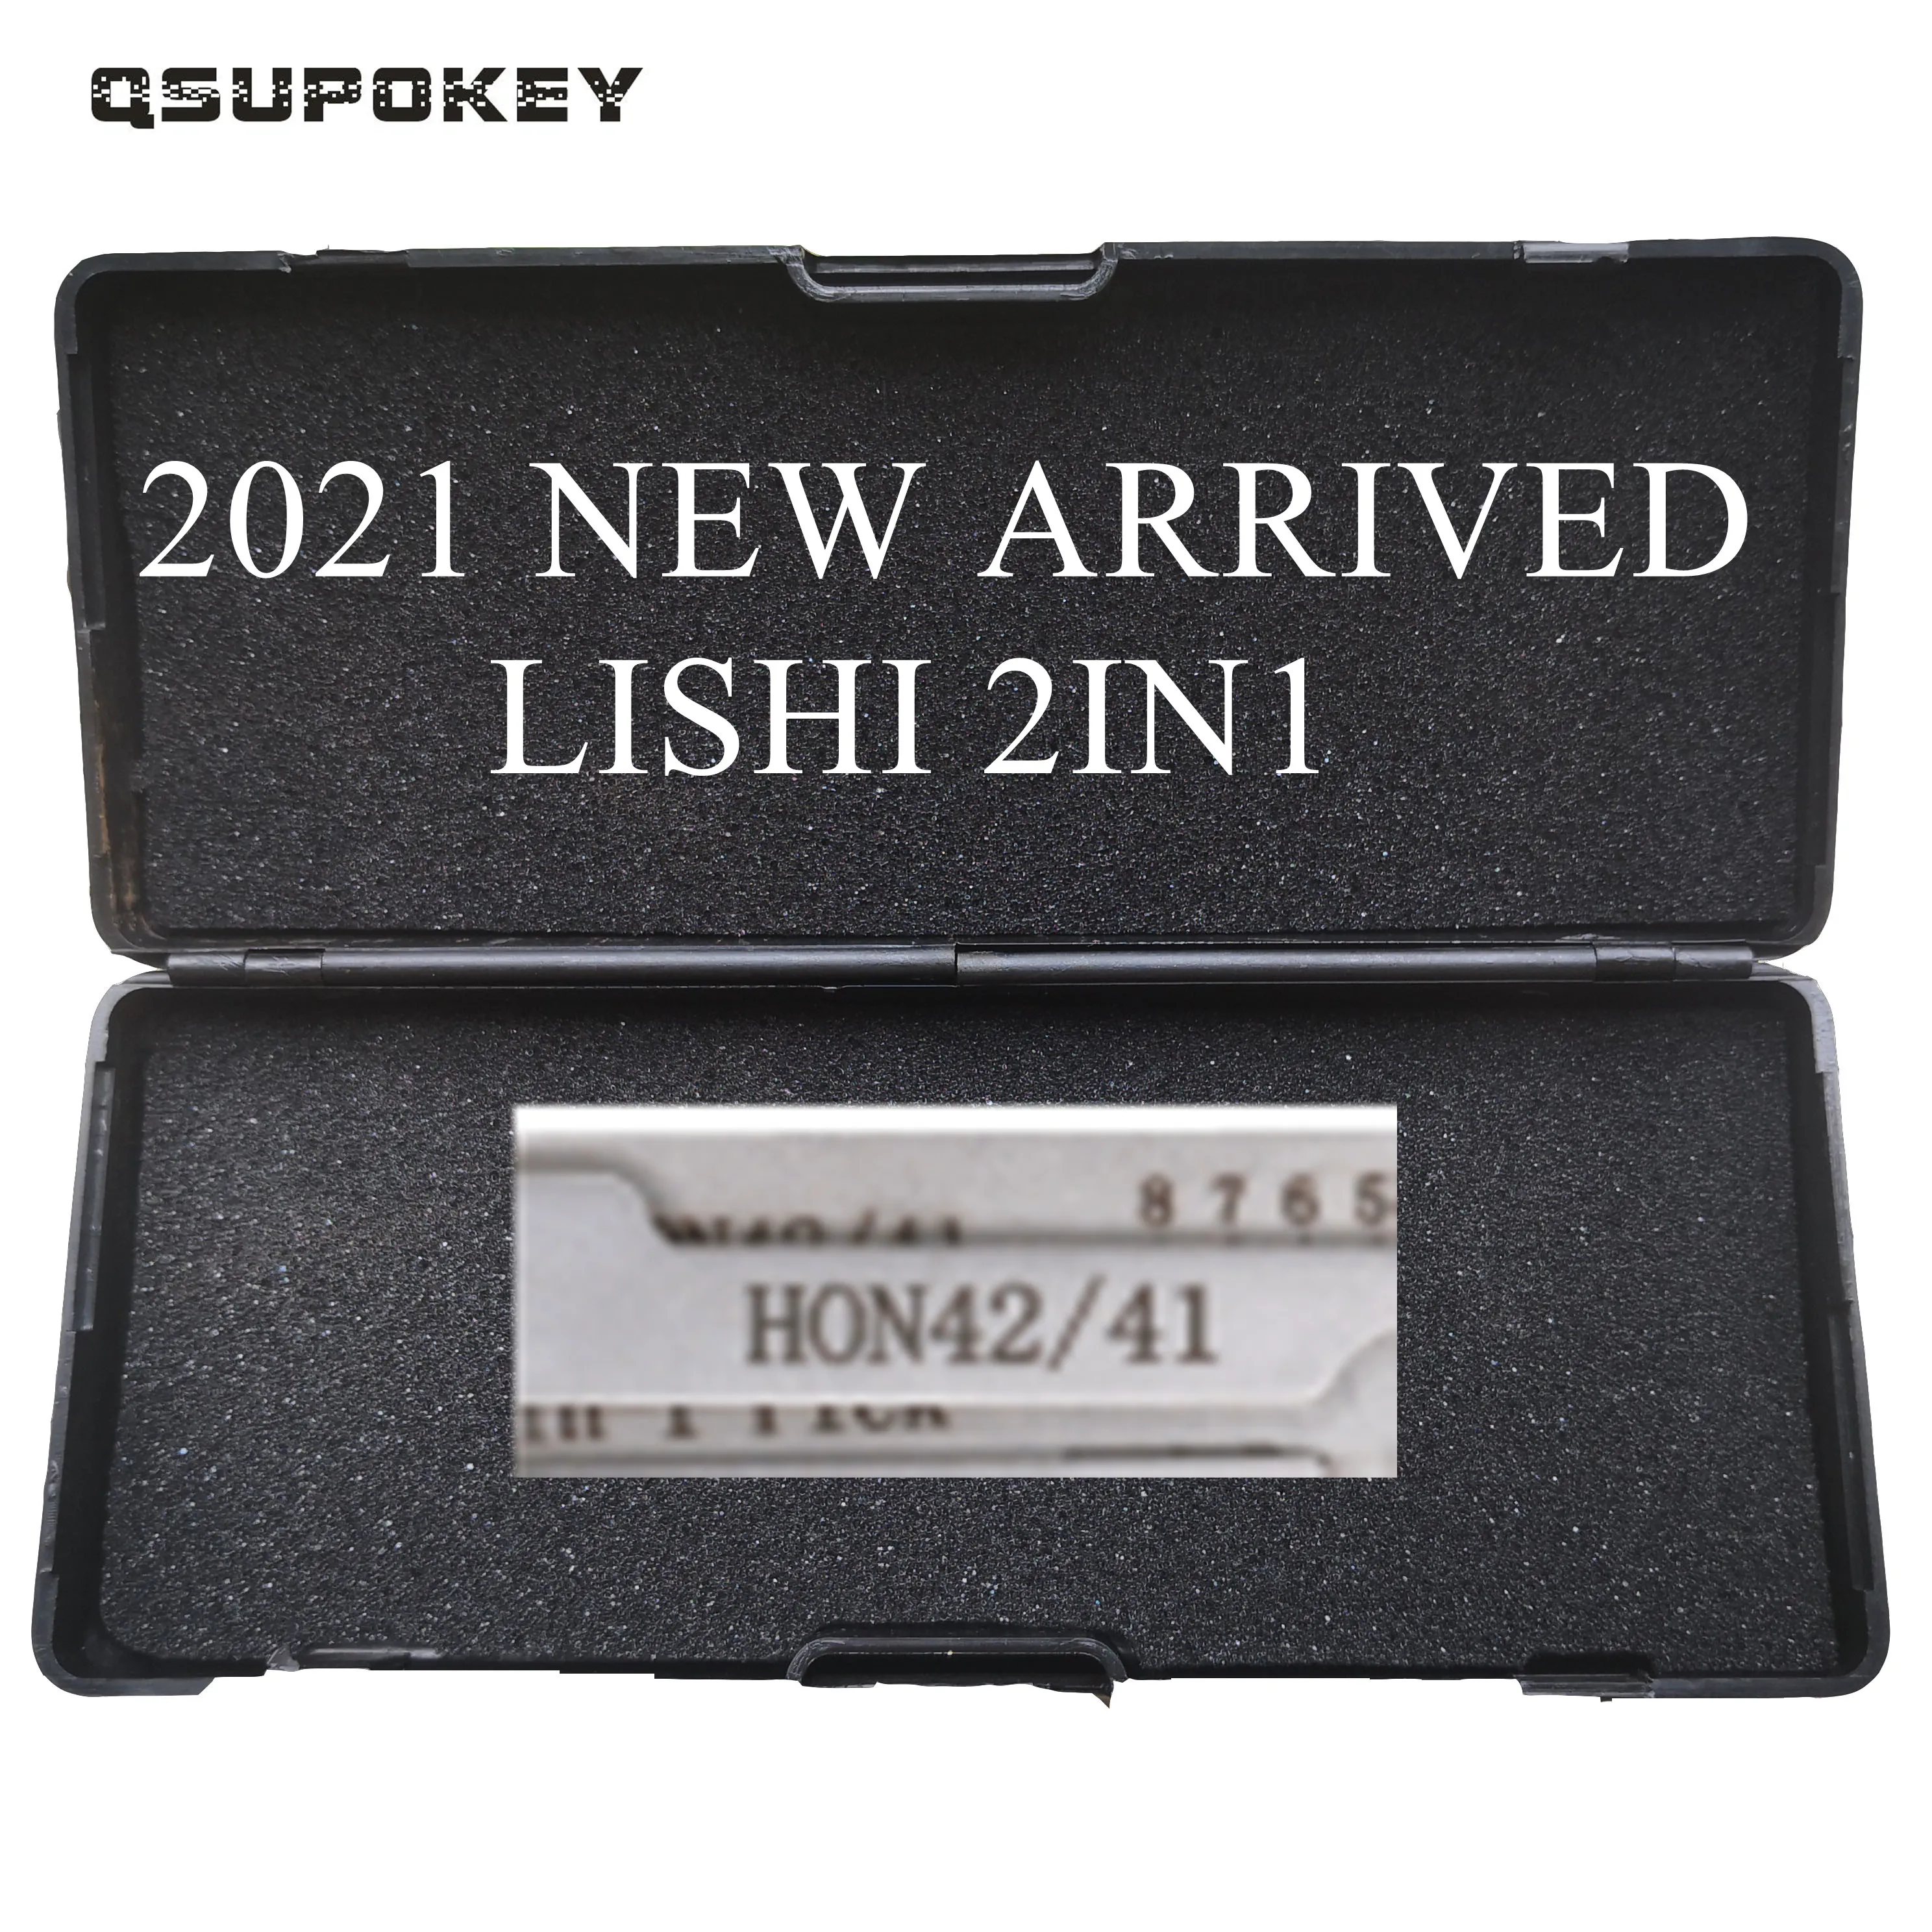 

QSUPOKEY 2021 NEW ARRIVED Original LiShi 2in1 repair Tool Locksmith Tools HON42/41 FOR H-ONDA